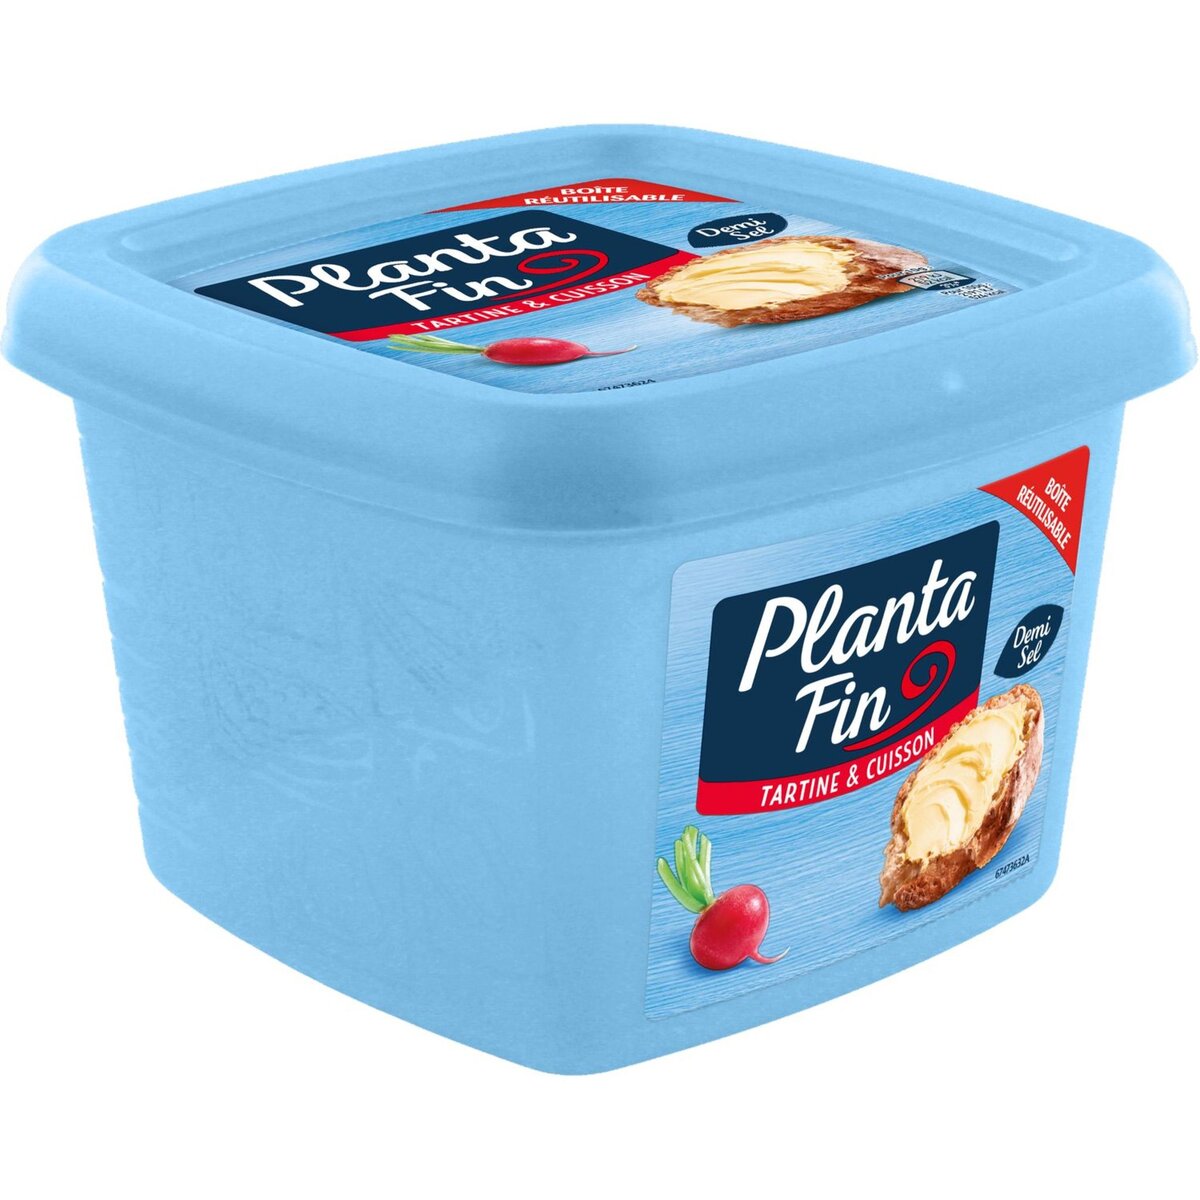 PLANTA FIN Planta fin margarine tartine & cuisson demi-sel 1kg